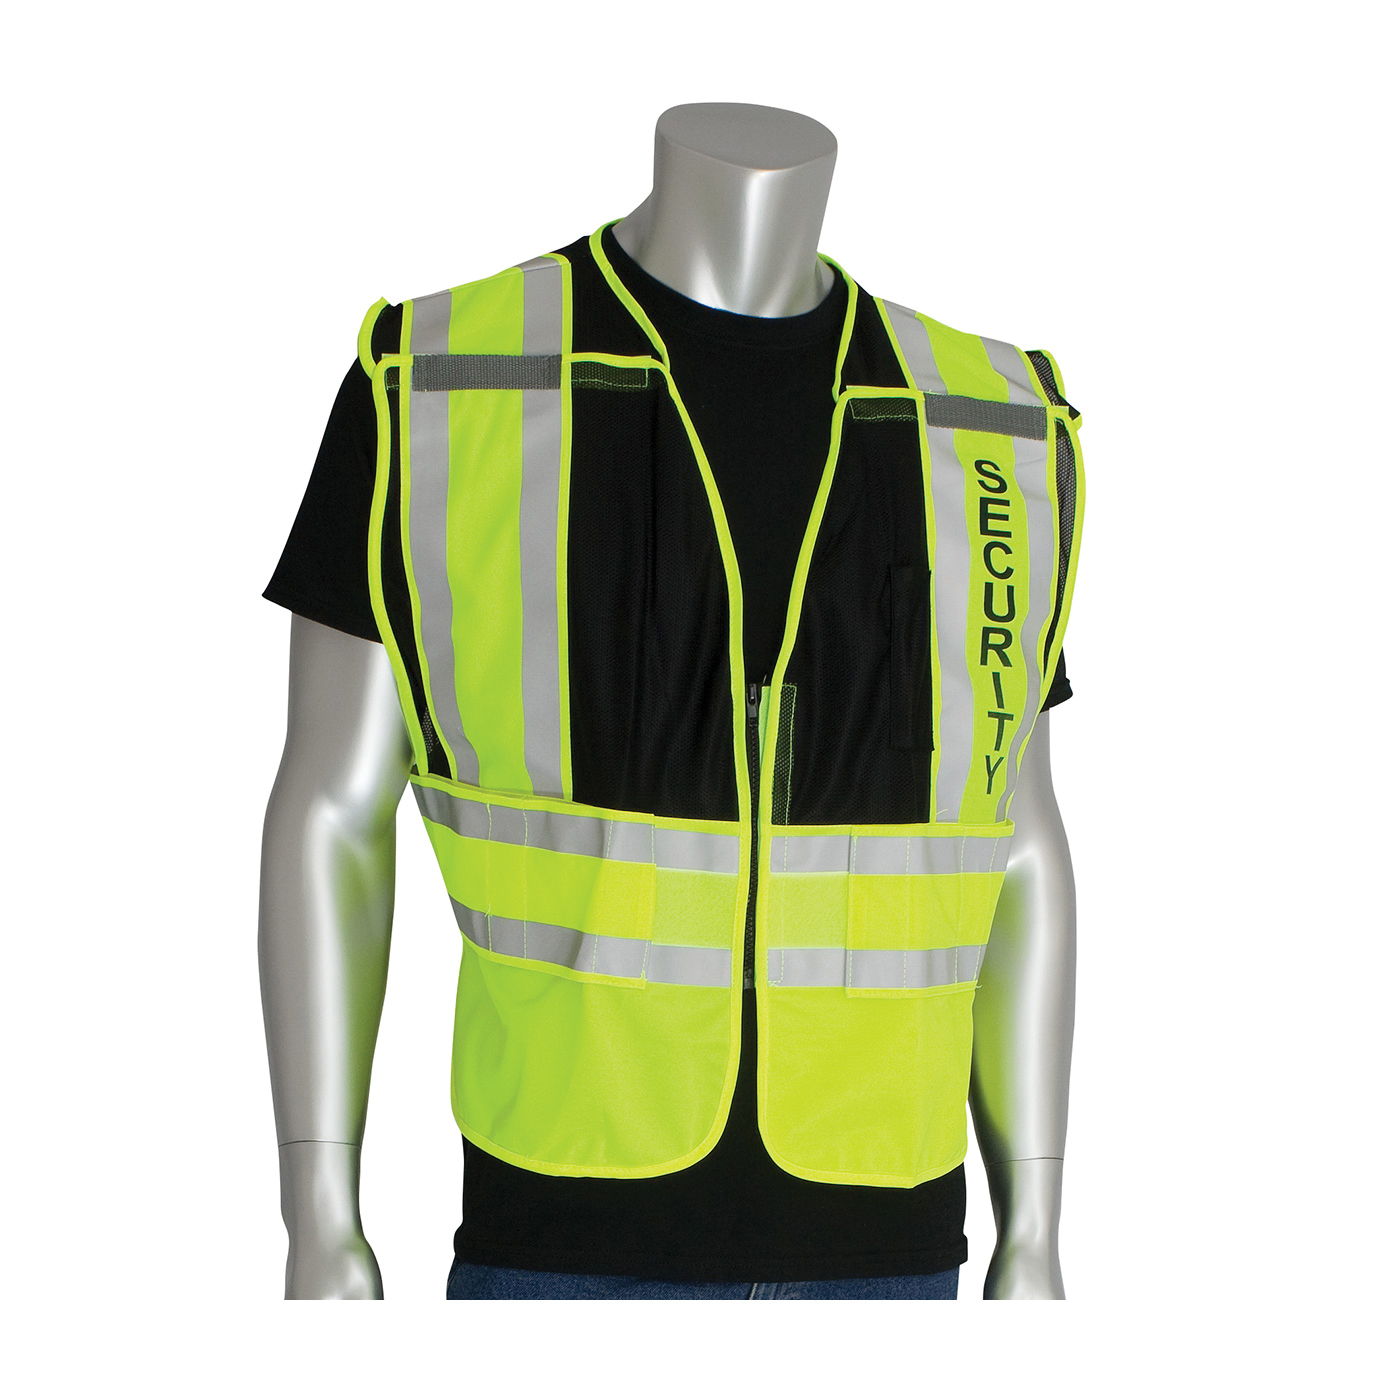 PIP® 302-PSV-BLK-2X/5X Public Safety Vest With SECURITY Logo, 2XL/5XL, Hi-Viz Lime Yellow/Black, Polyester, Zipper Closure, 2 Pockets, ANSI Class: Class 2, Specifications Met: ANSI 107 Type P